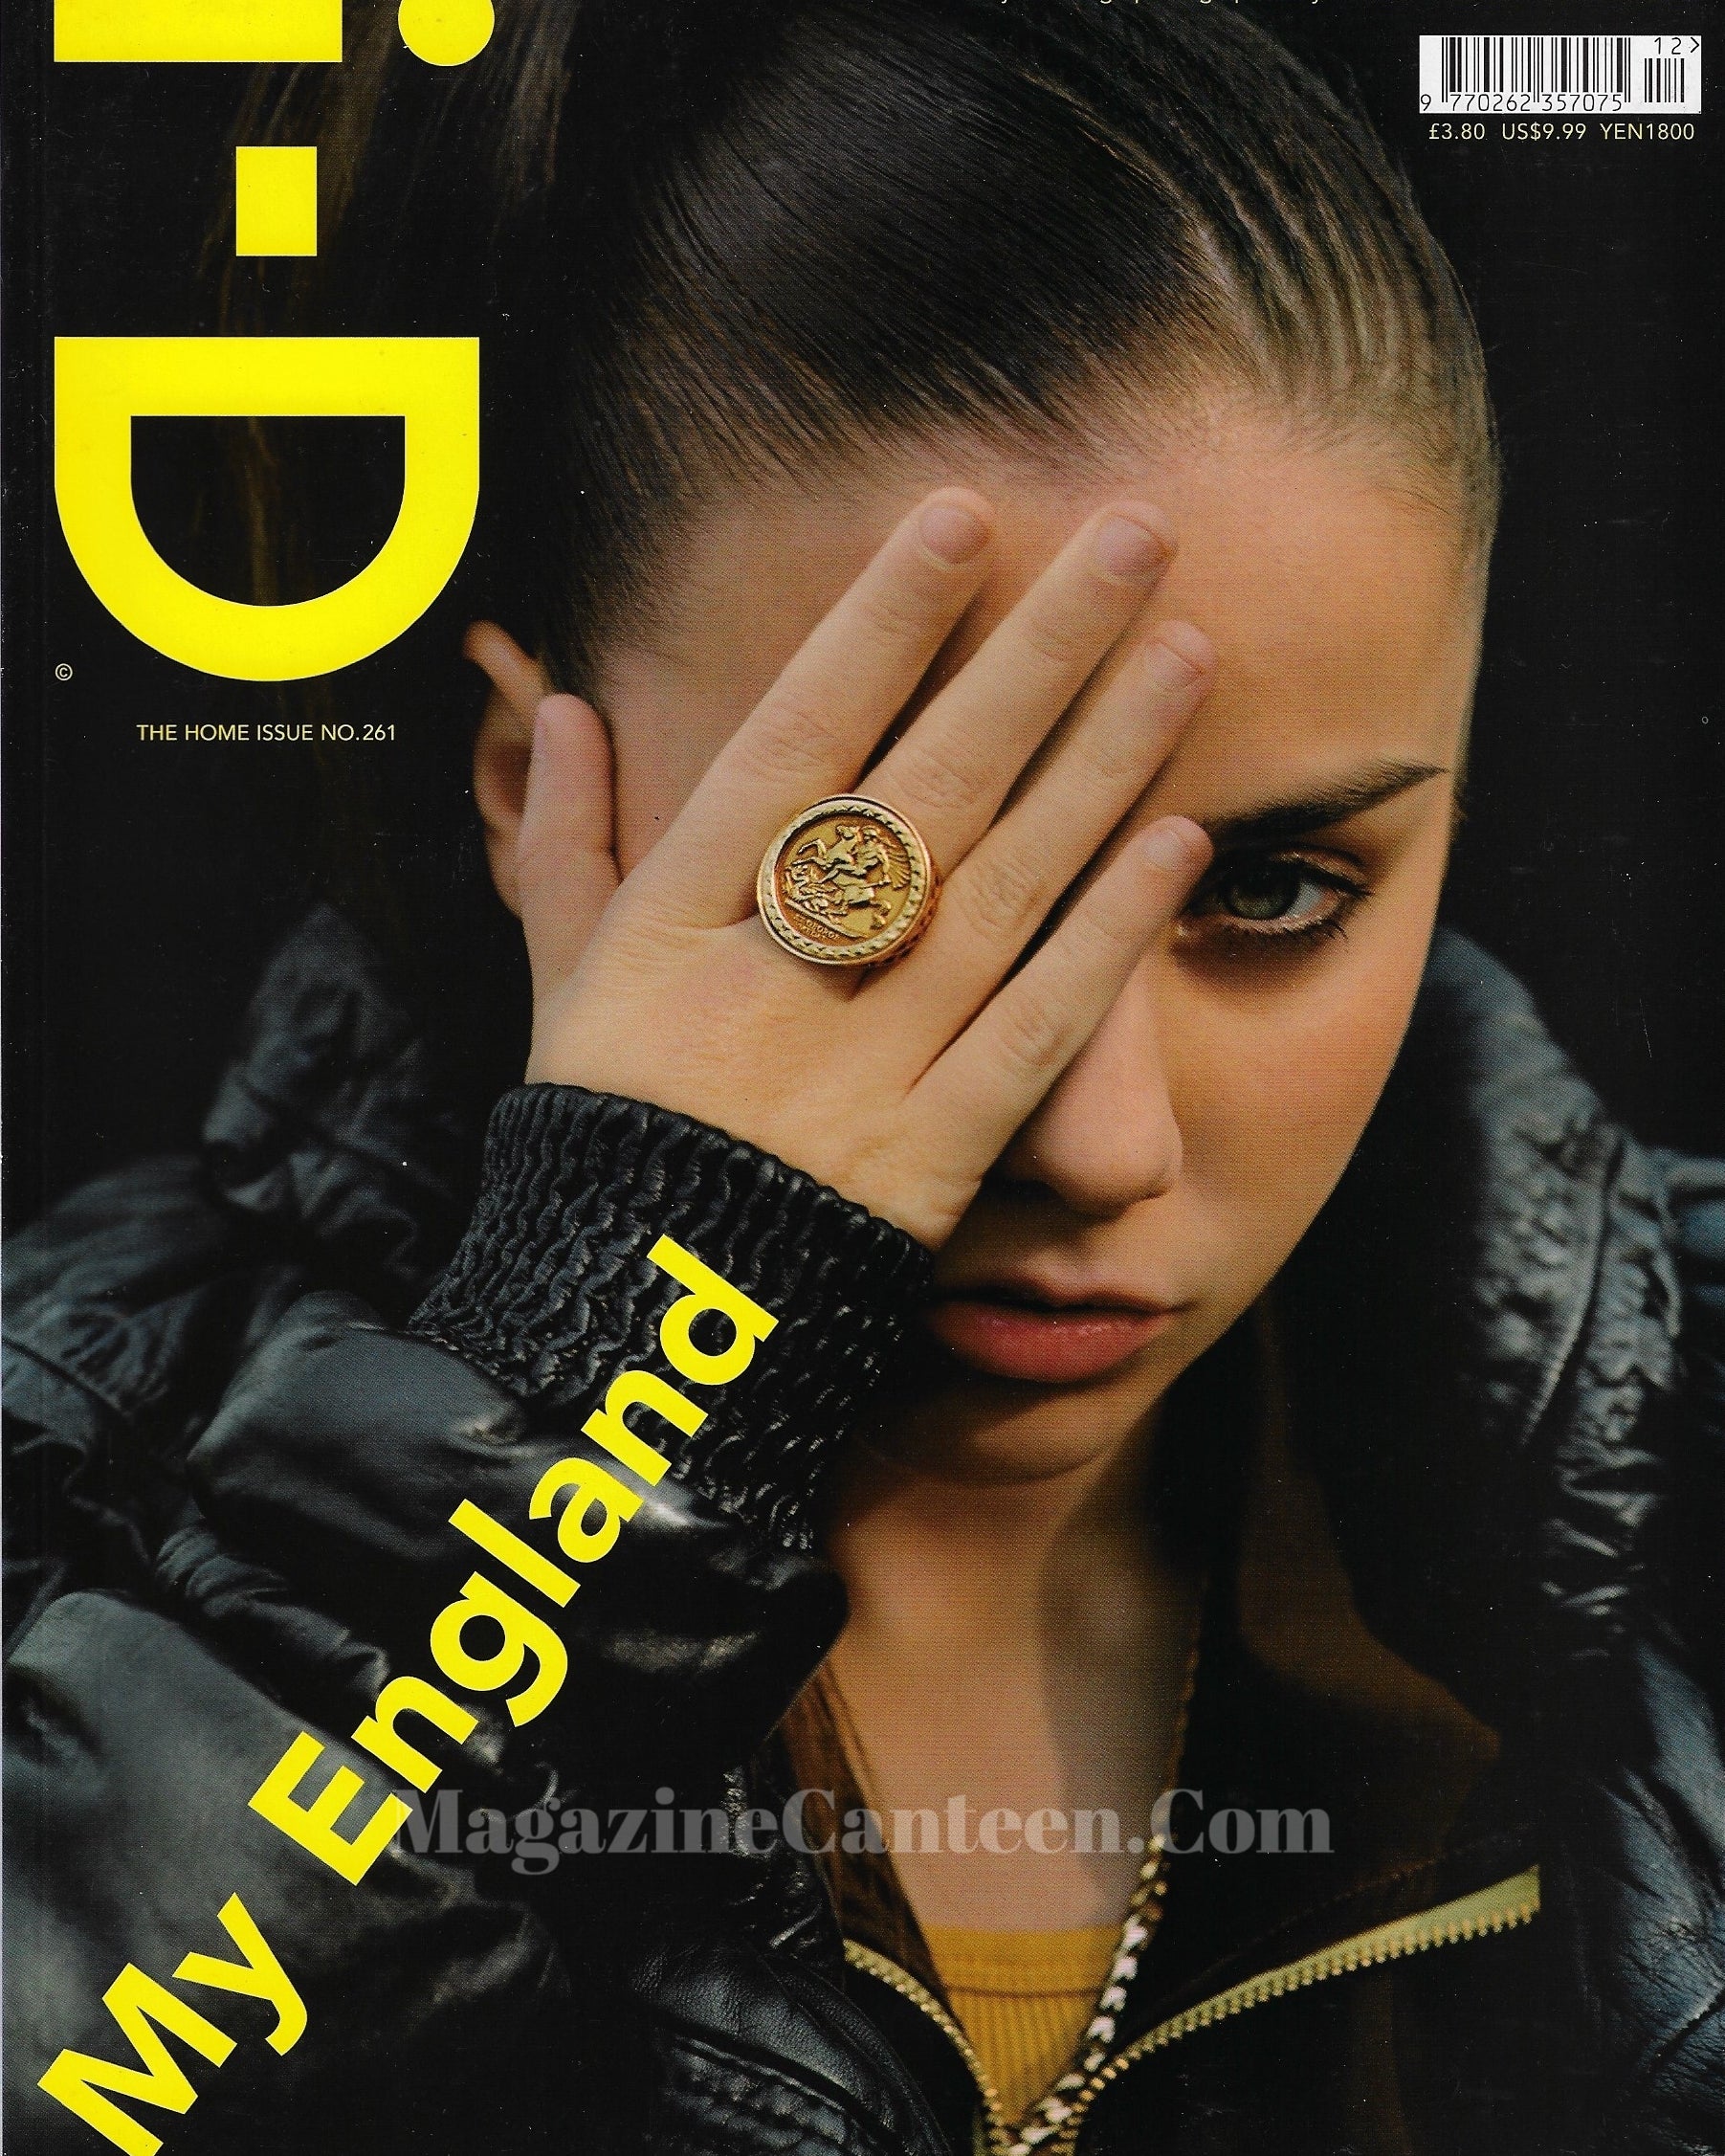 I-D Magazine 261 - Lady Sovereign 2005